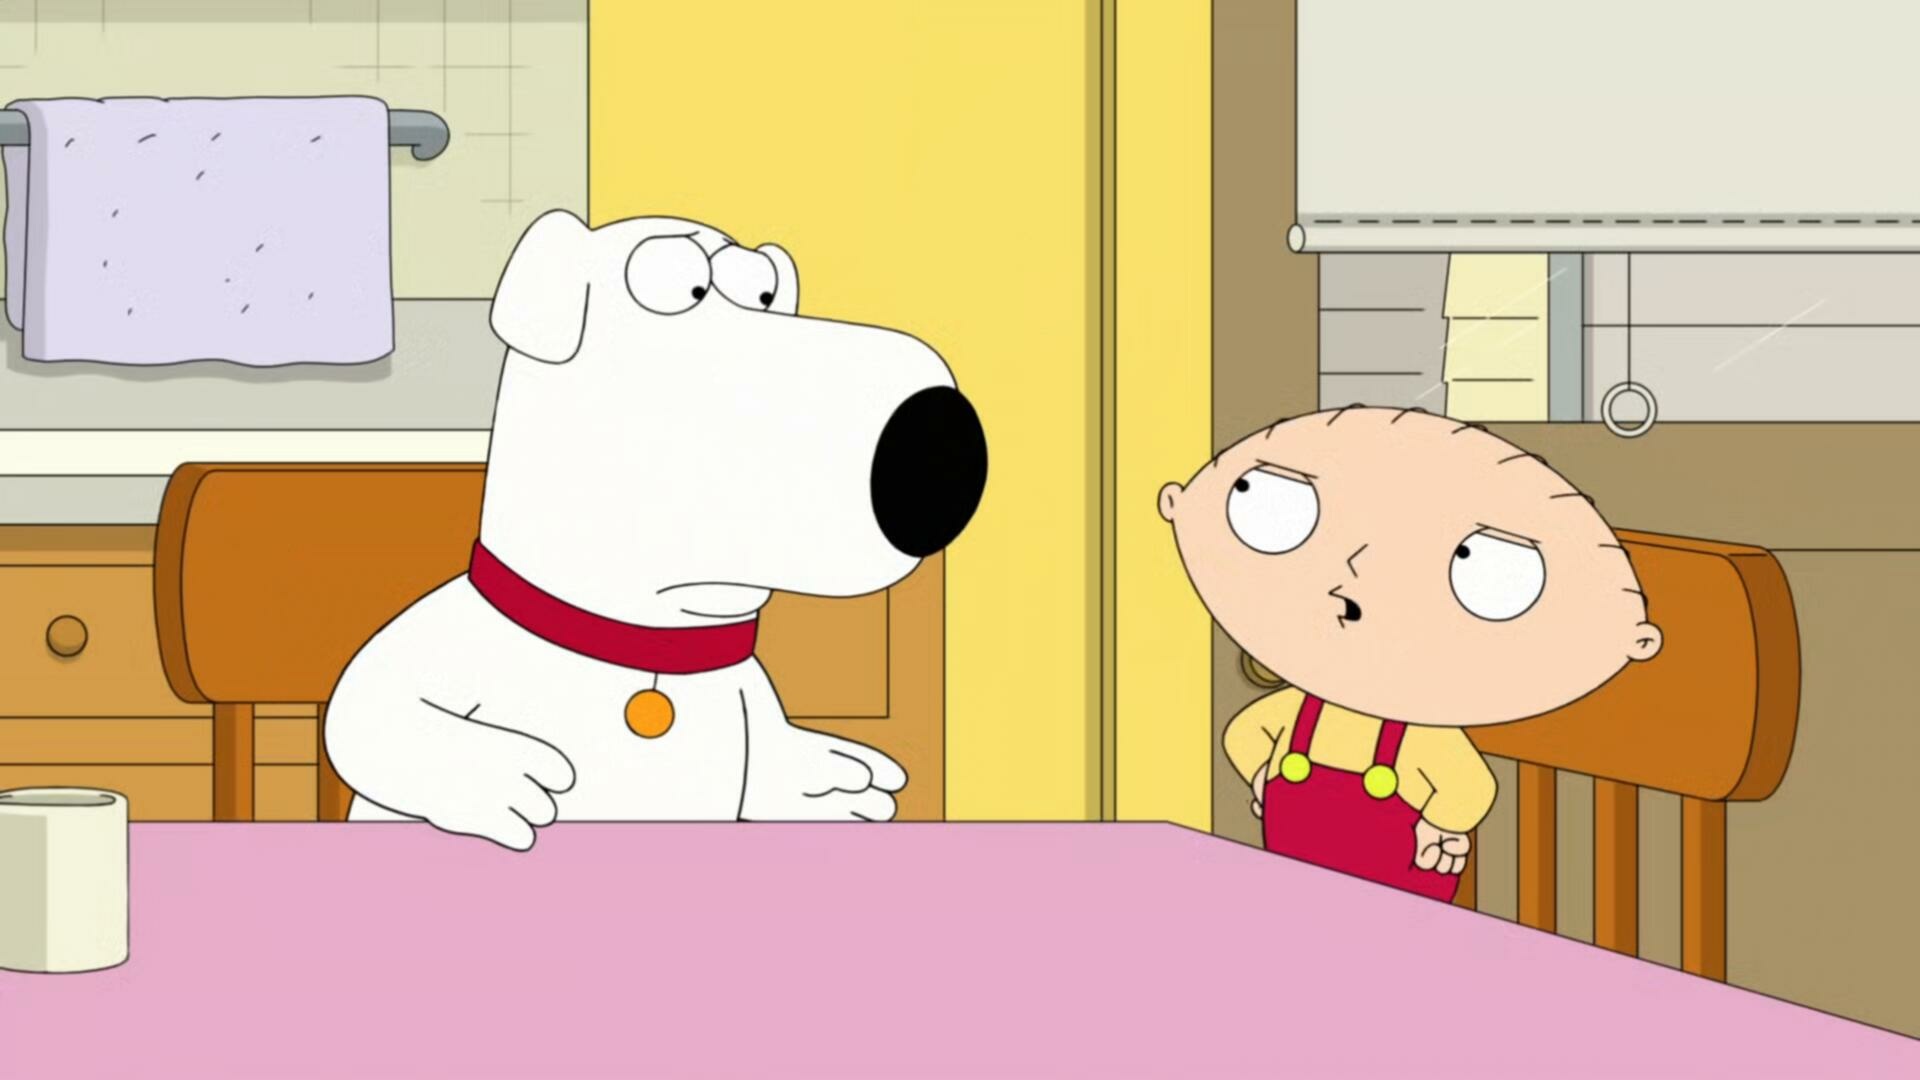 Family Guy S22E04 1080p HEVC x265 MeGusta TGx